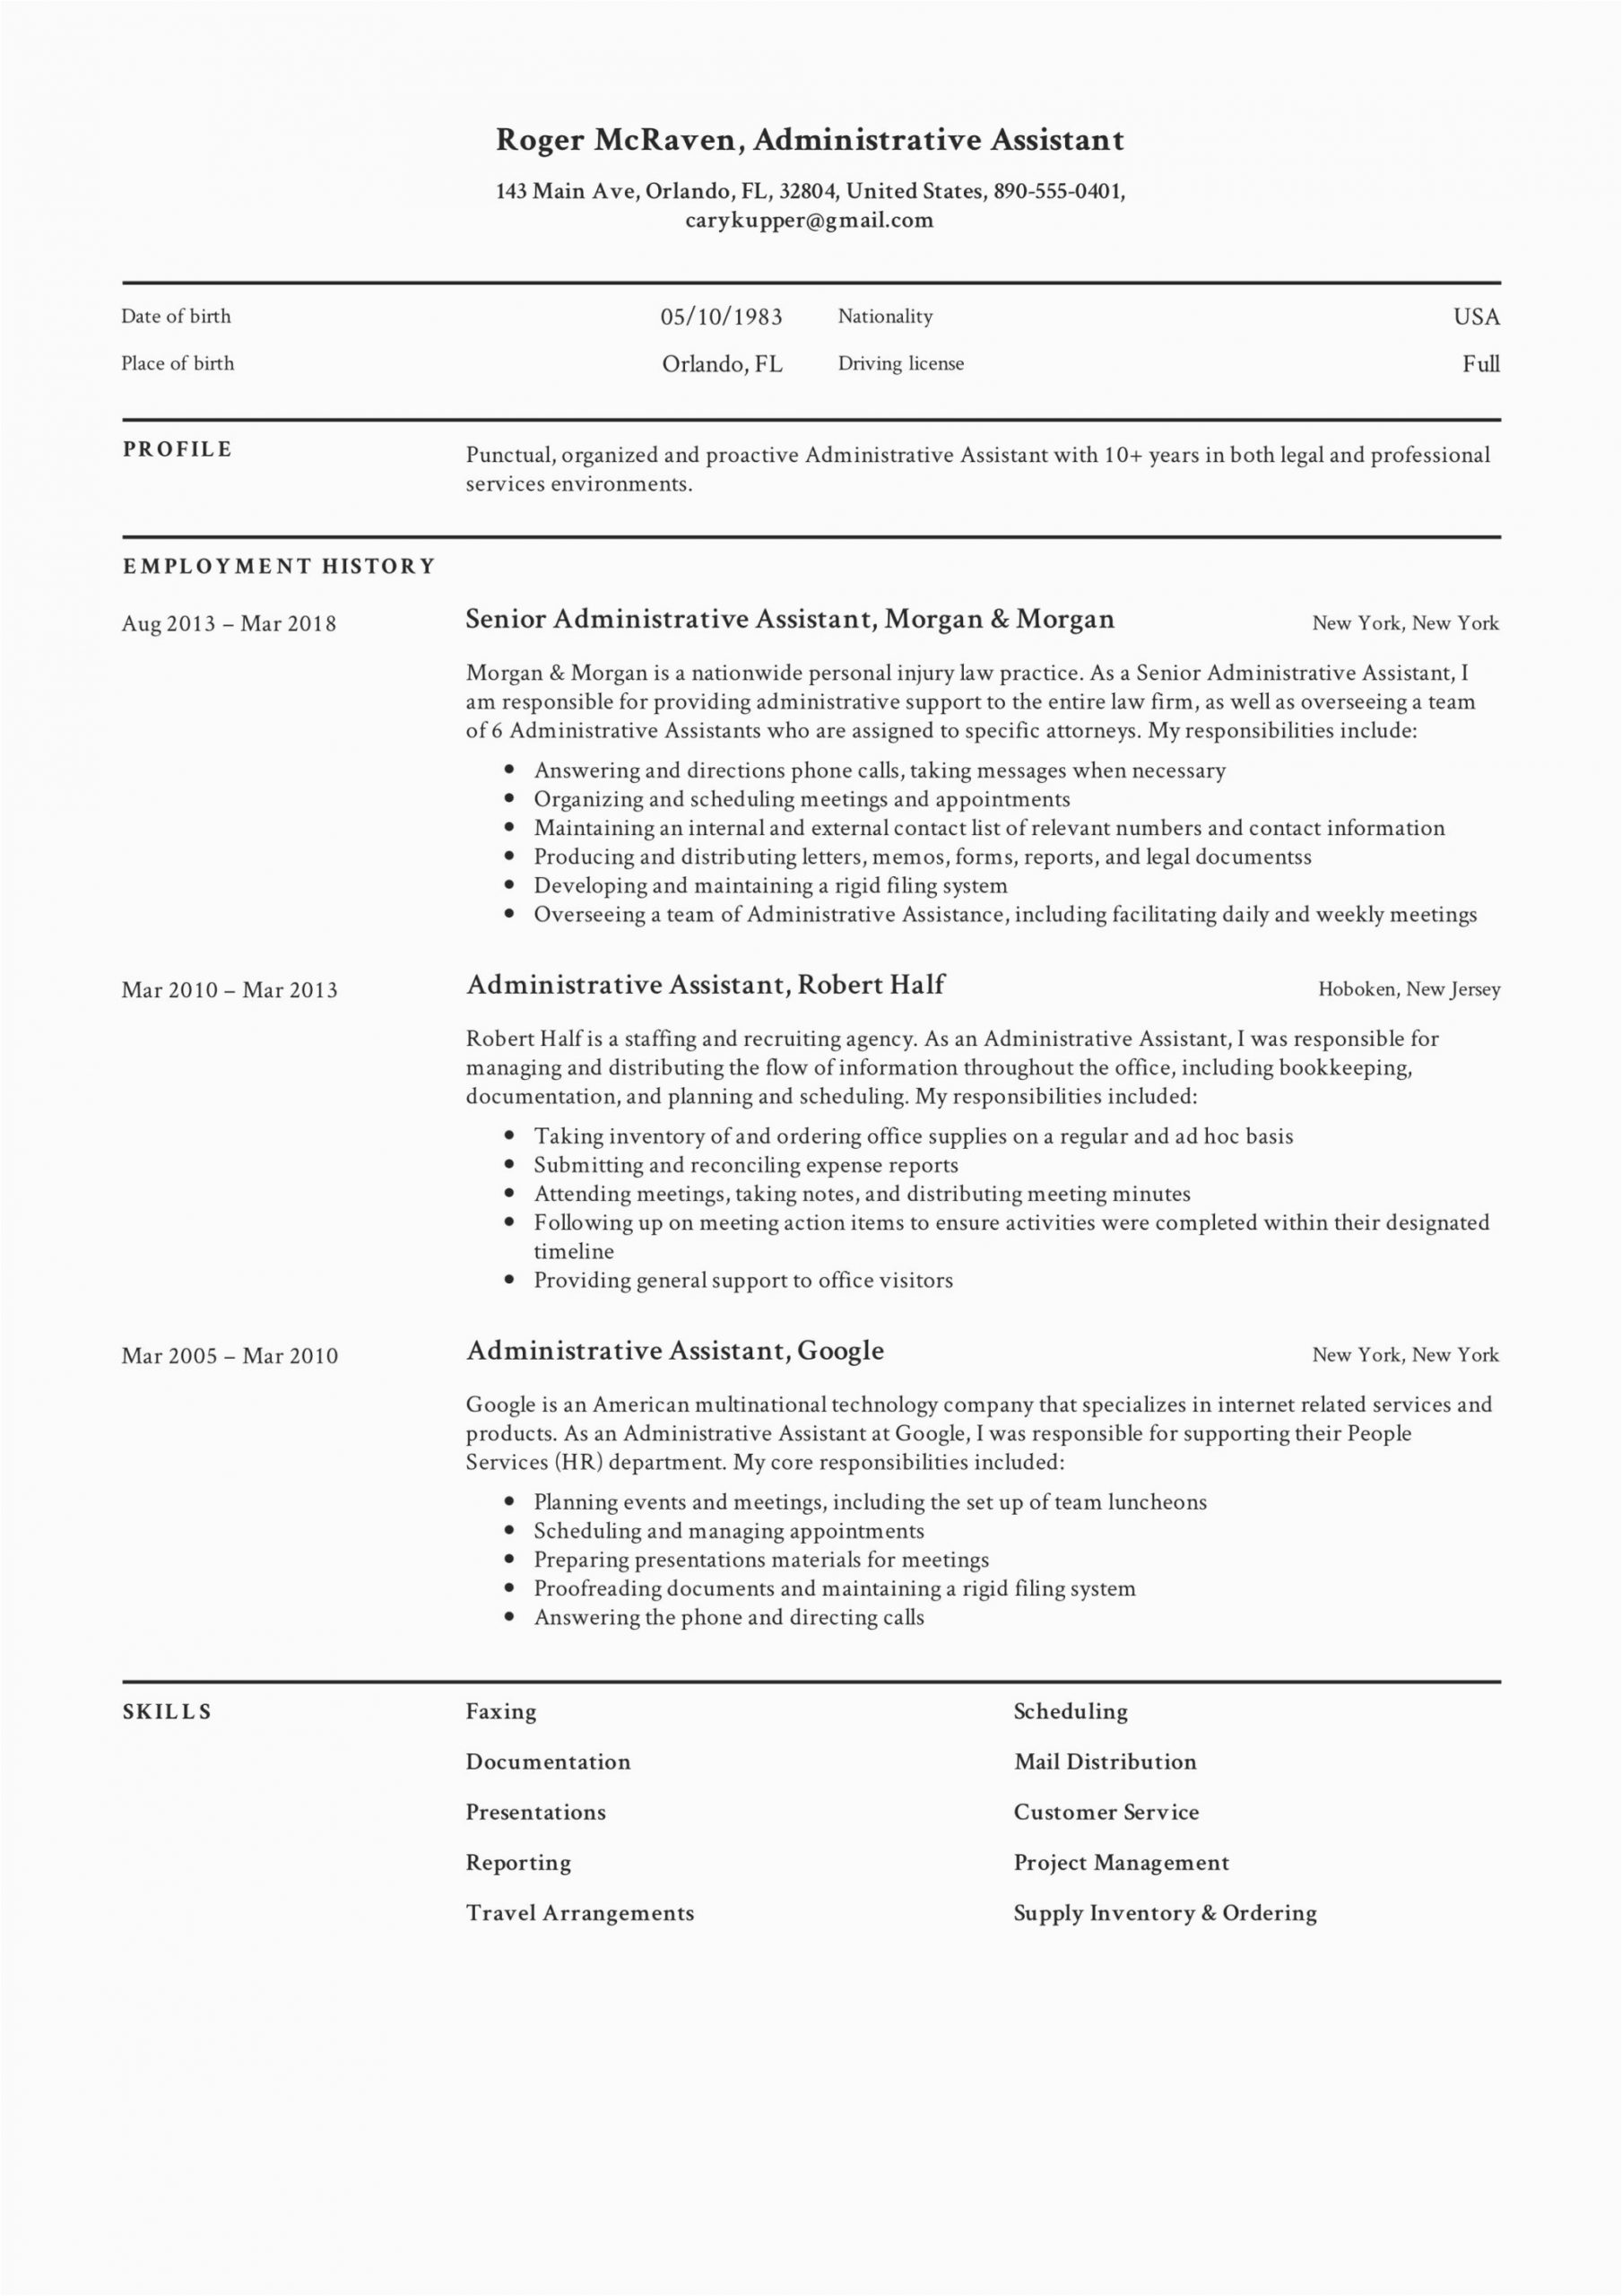 Sample Resume Profile for Administrative assistant Full Guide Administrative assistant Resume [ 12 Samples